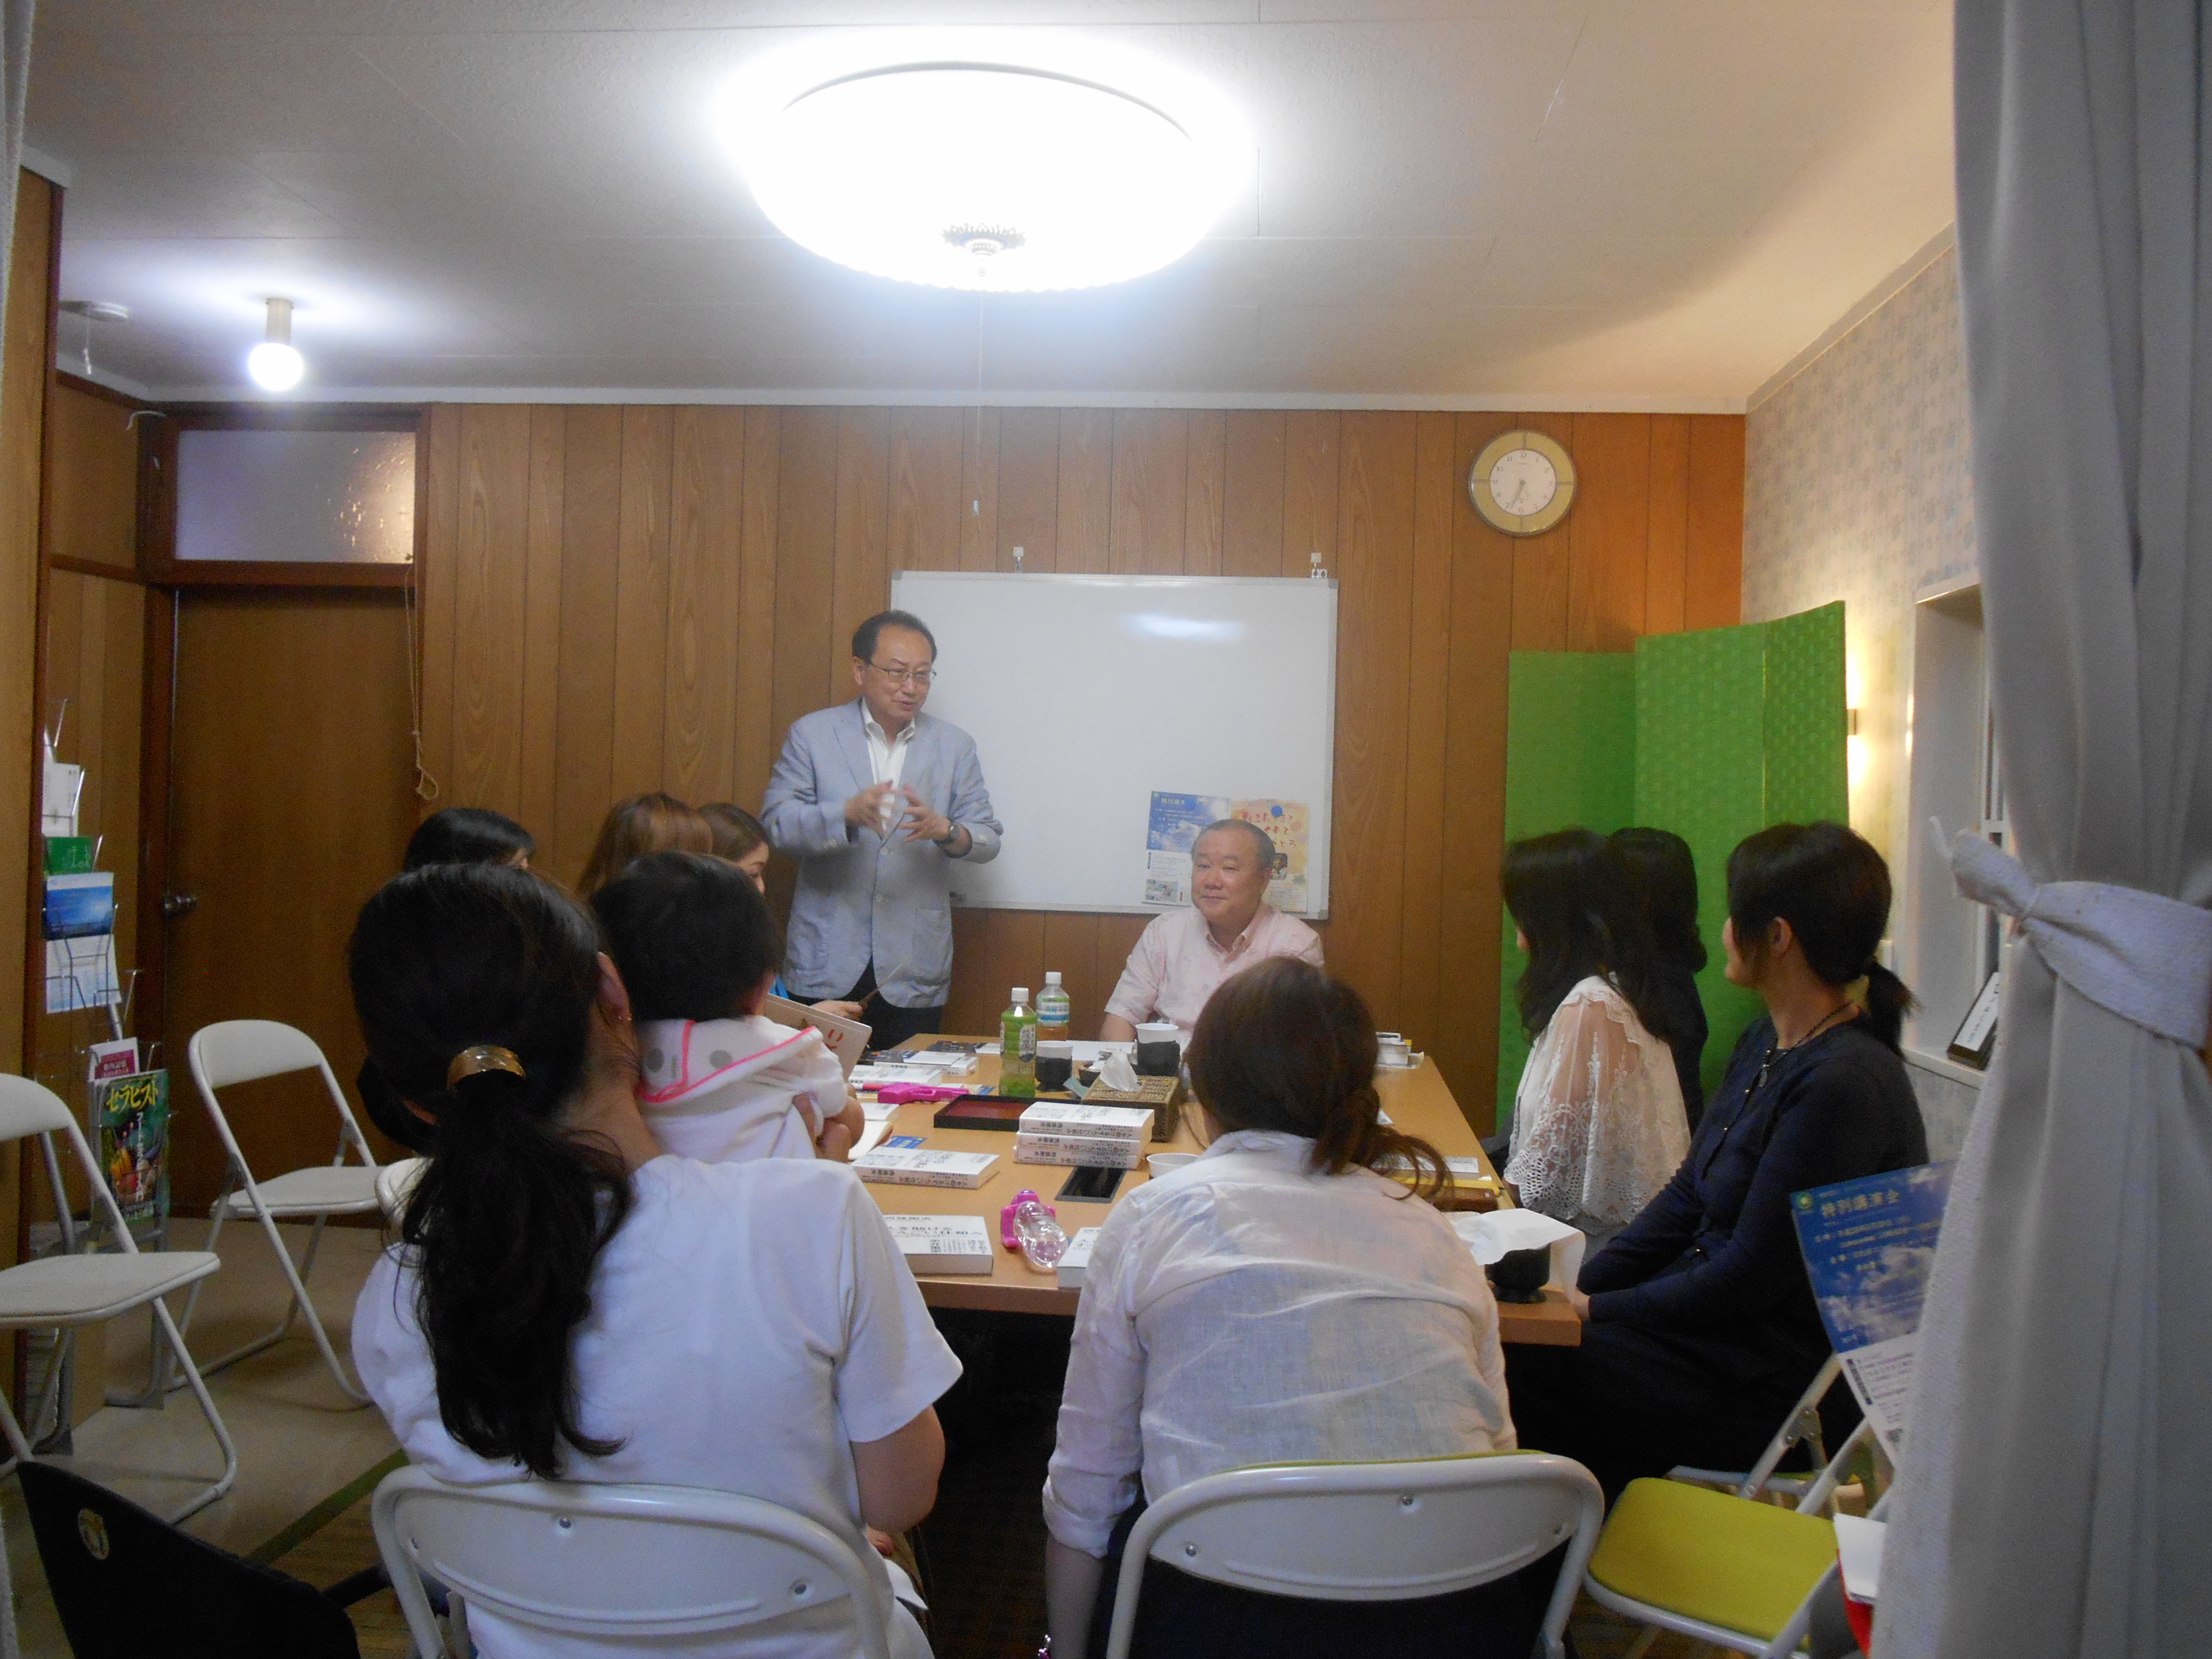 DSCN1639 - 2019年7月16日愛の子育て塾第15期第2講座開催しました。